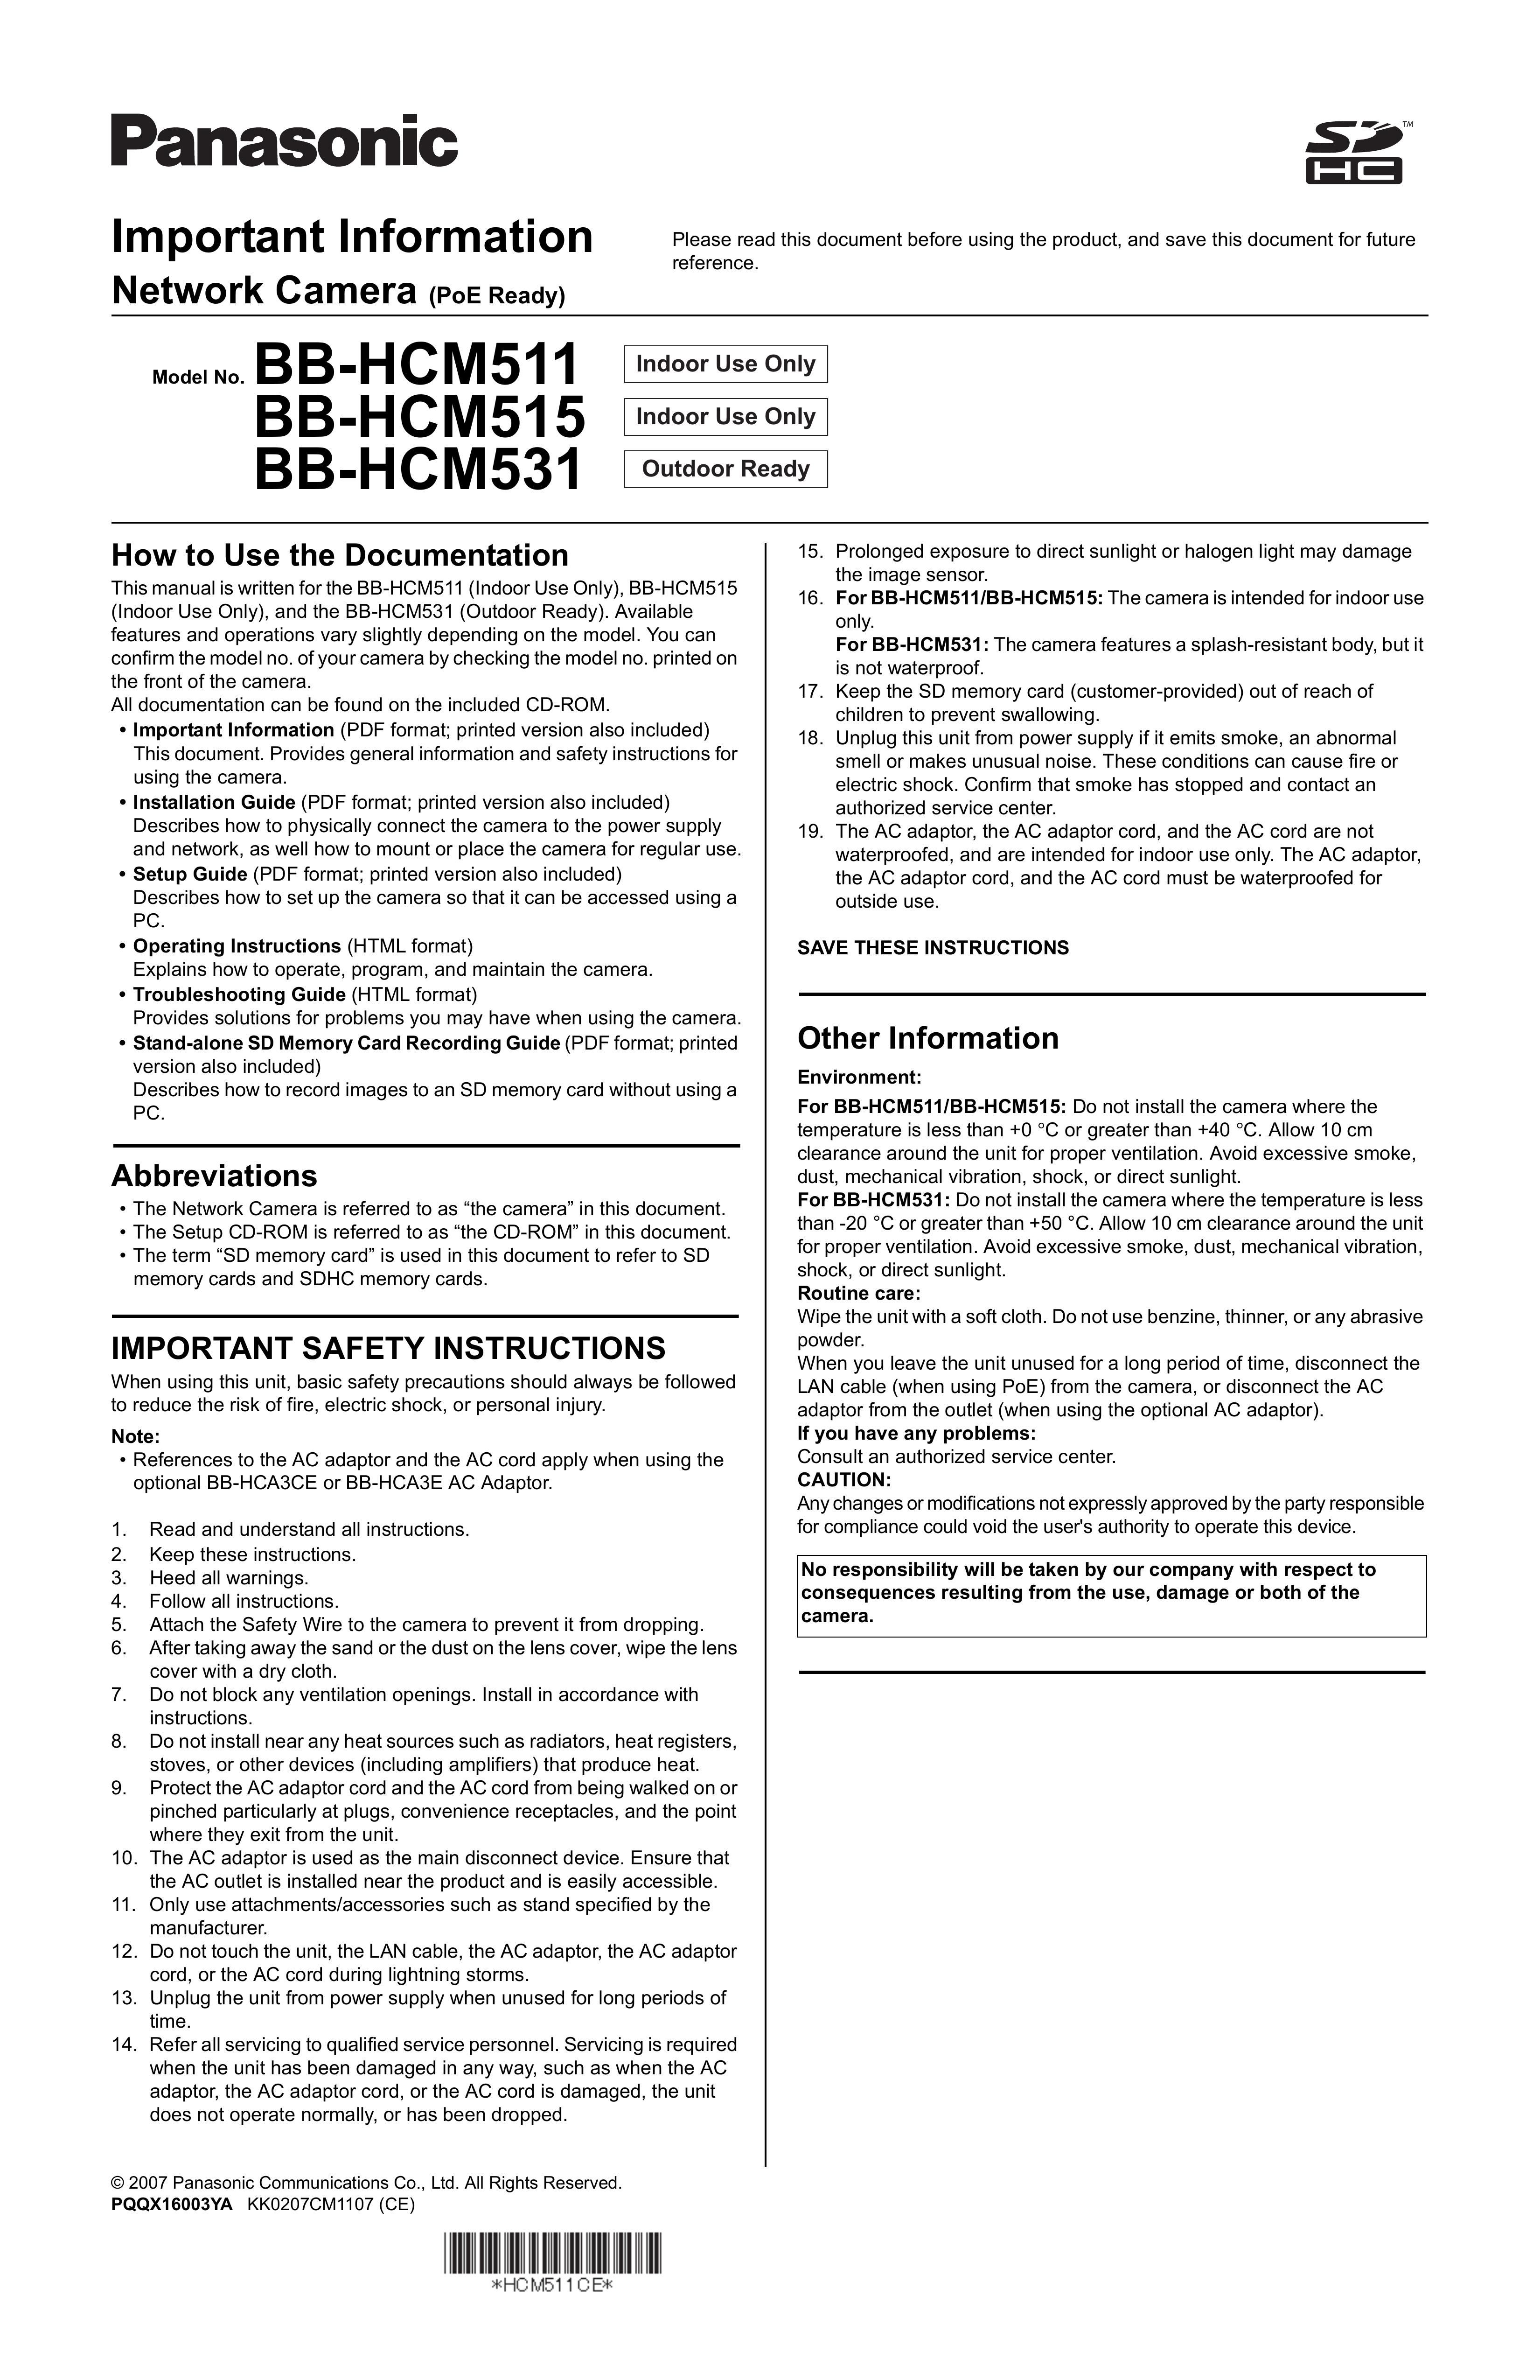 Panasonic BB-HCM511 Security Camera User Manual